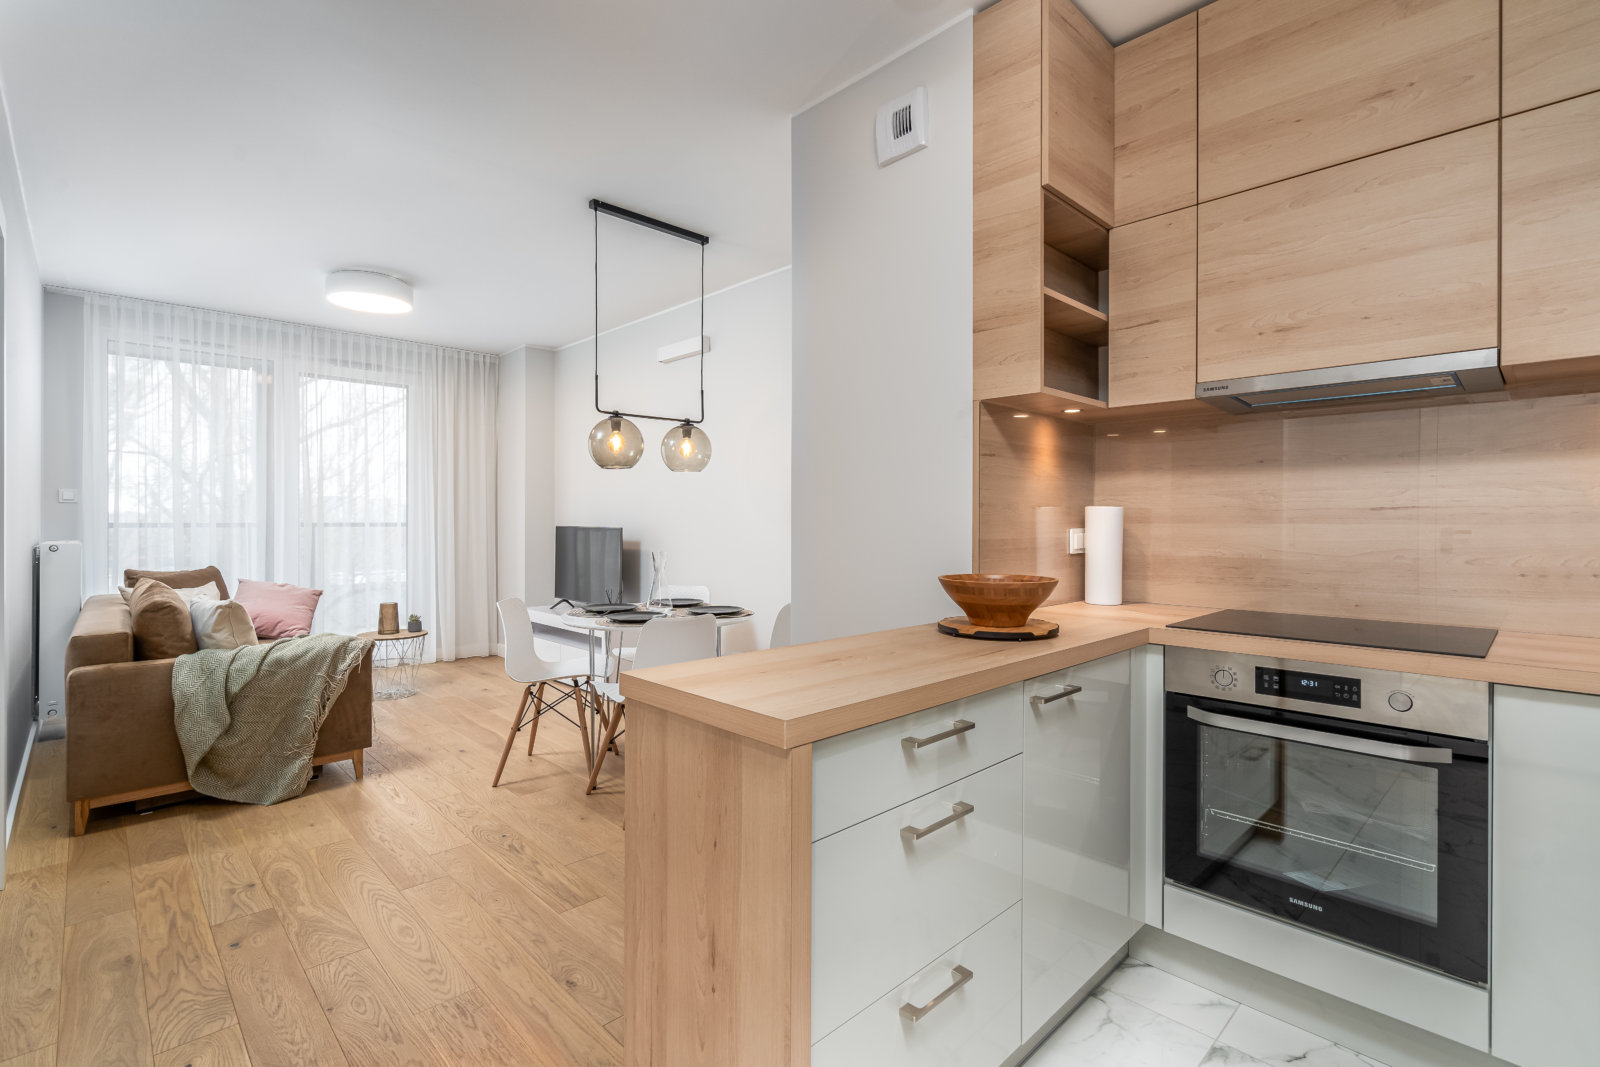 Szwedzka 4 Apartments Rented in Four Months! | Hamilton May Blog